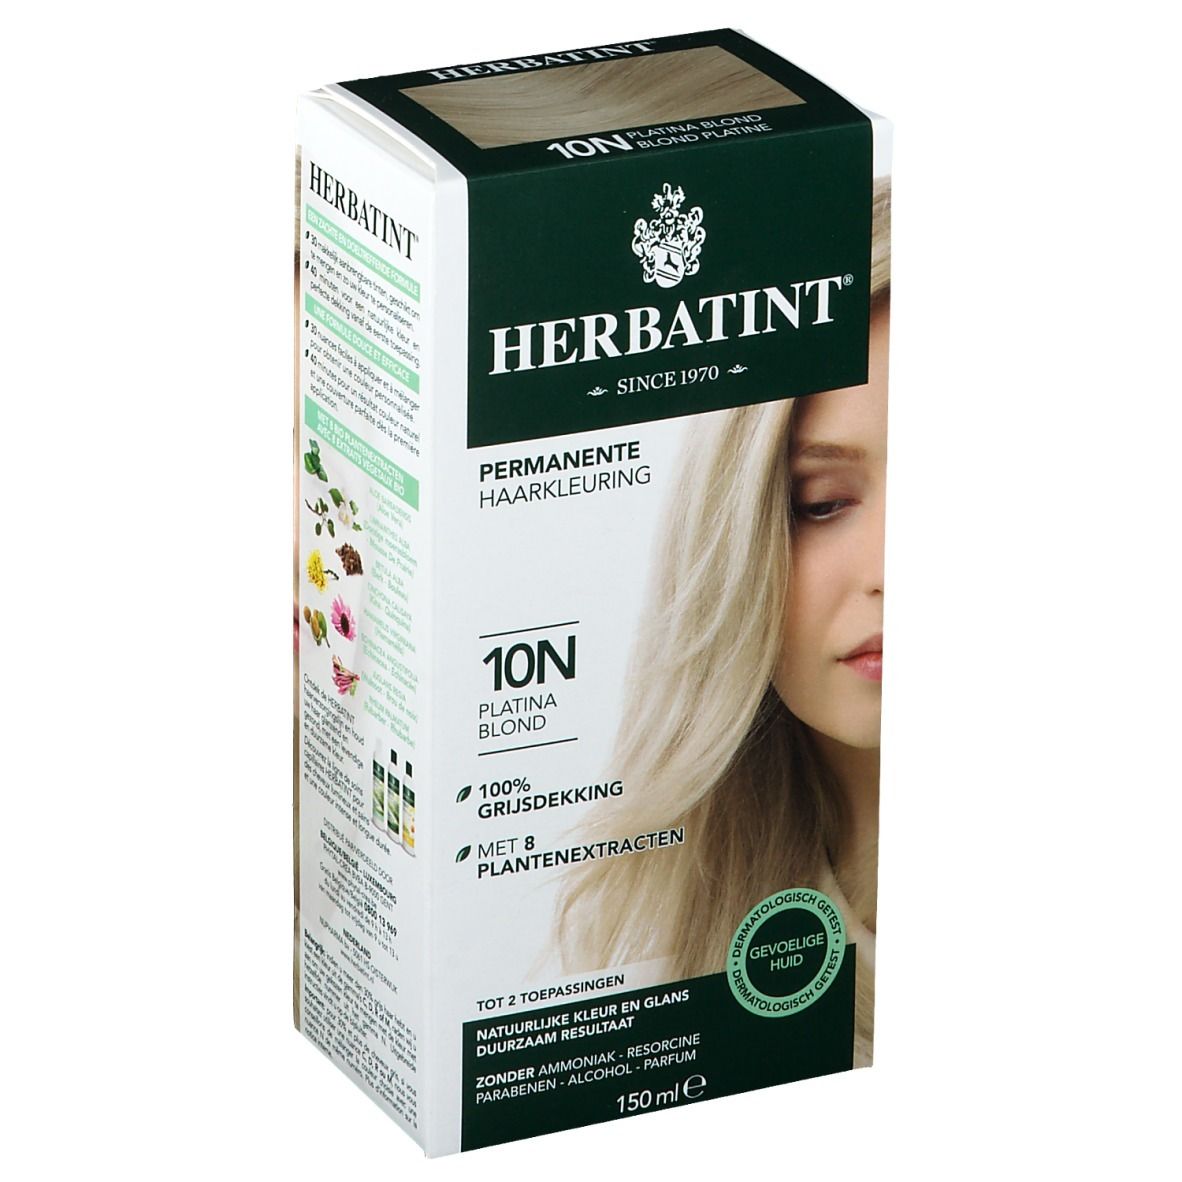 Herbatint Permanente Haarkleuring Platina Blond 10N